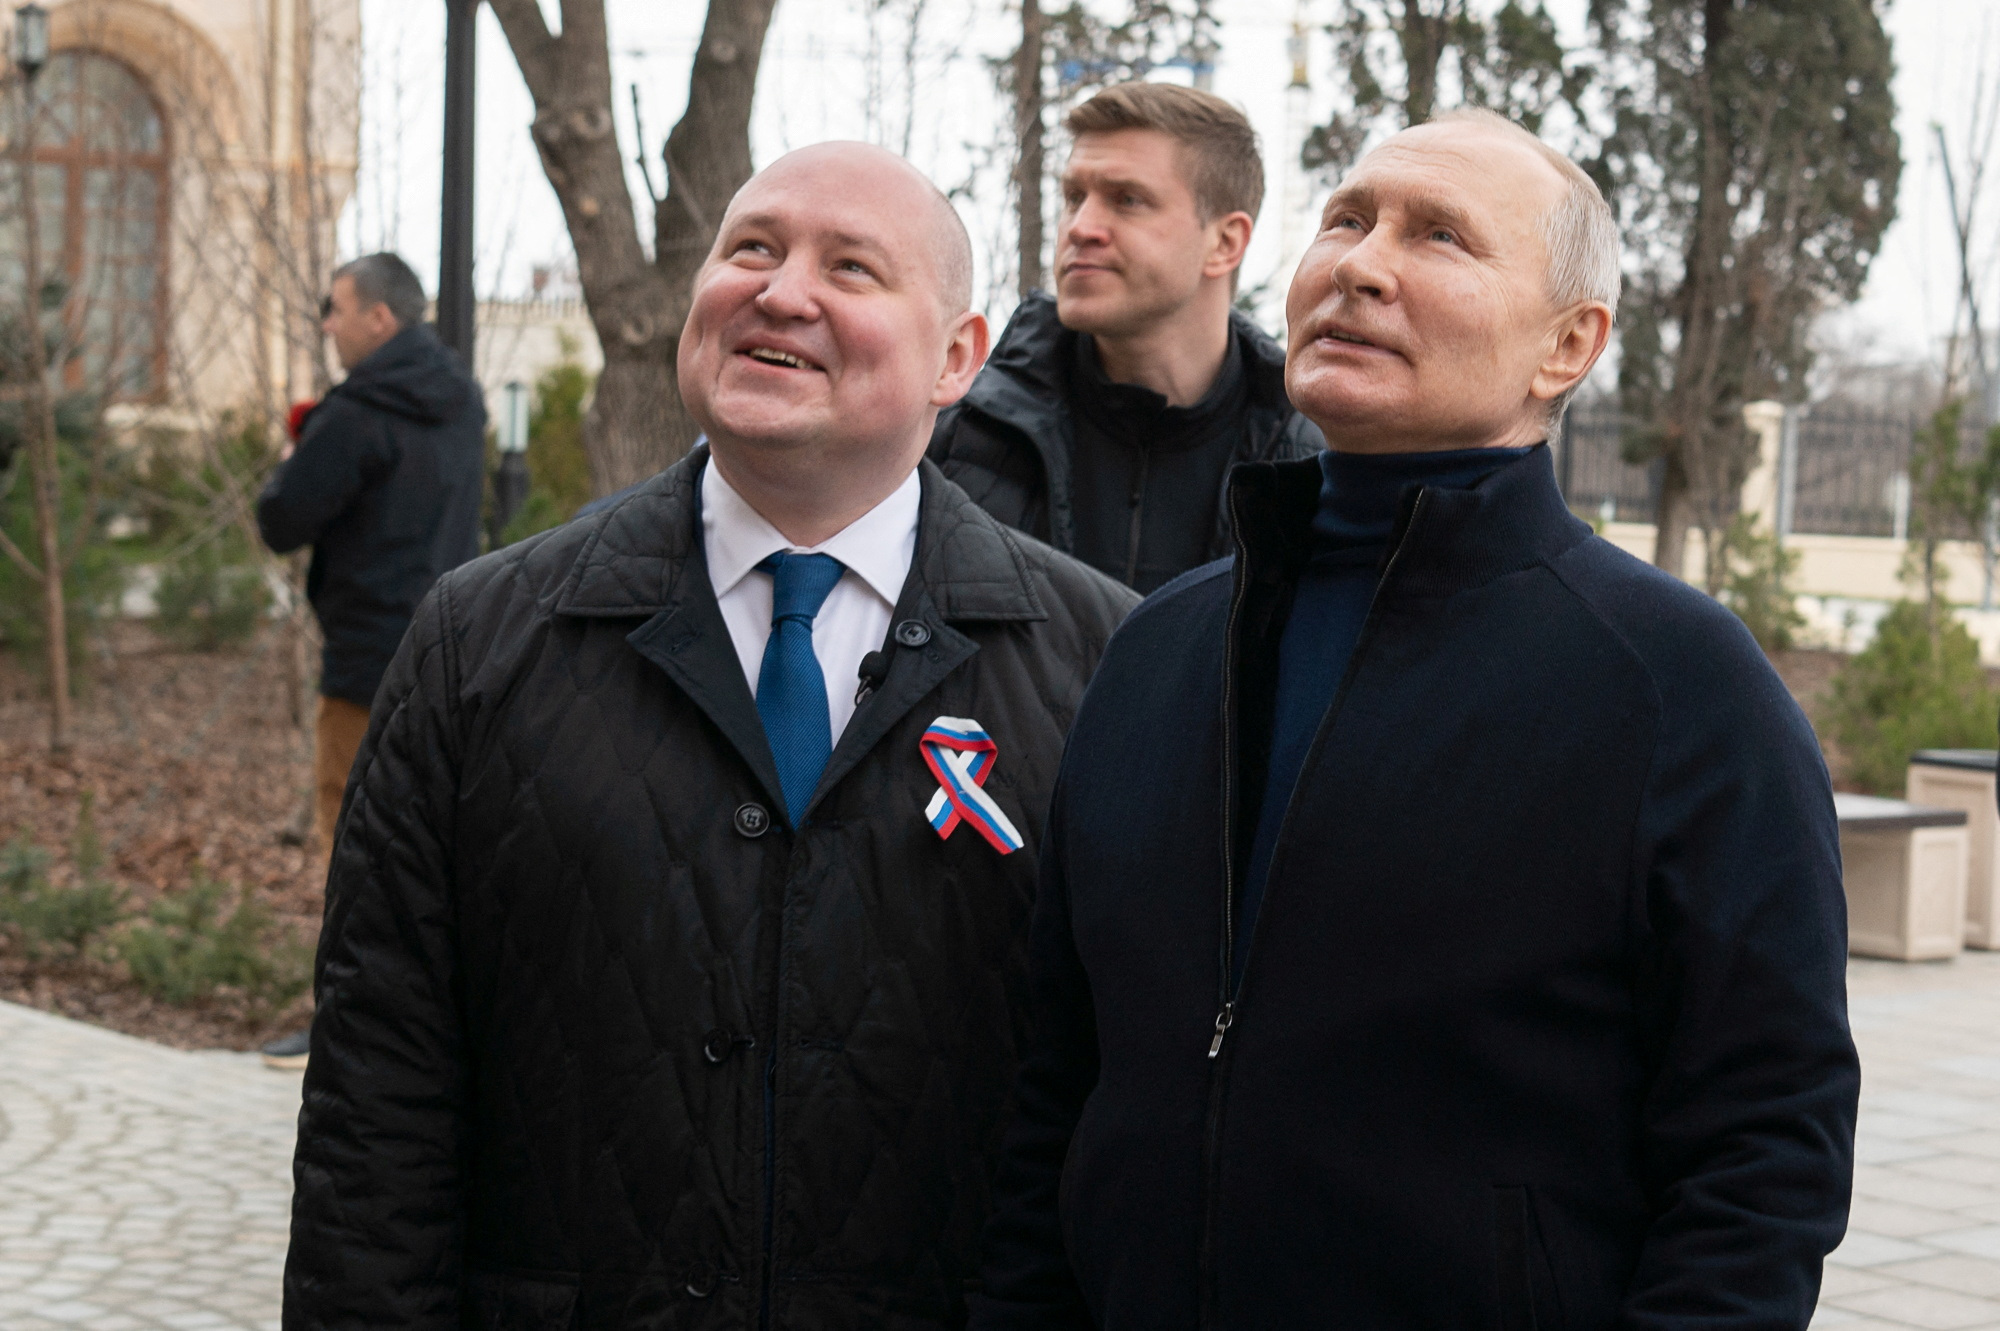 Putin efectuó una “visita sorpresa” a la ocupada ciudad ucraniana de Mariupol en su primer viaje al Donbás. (REUTERS)